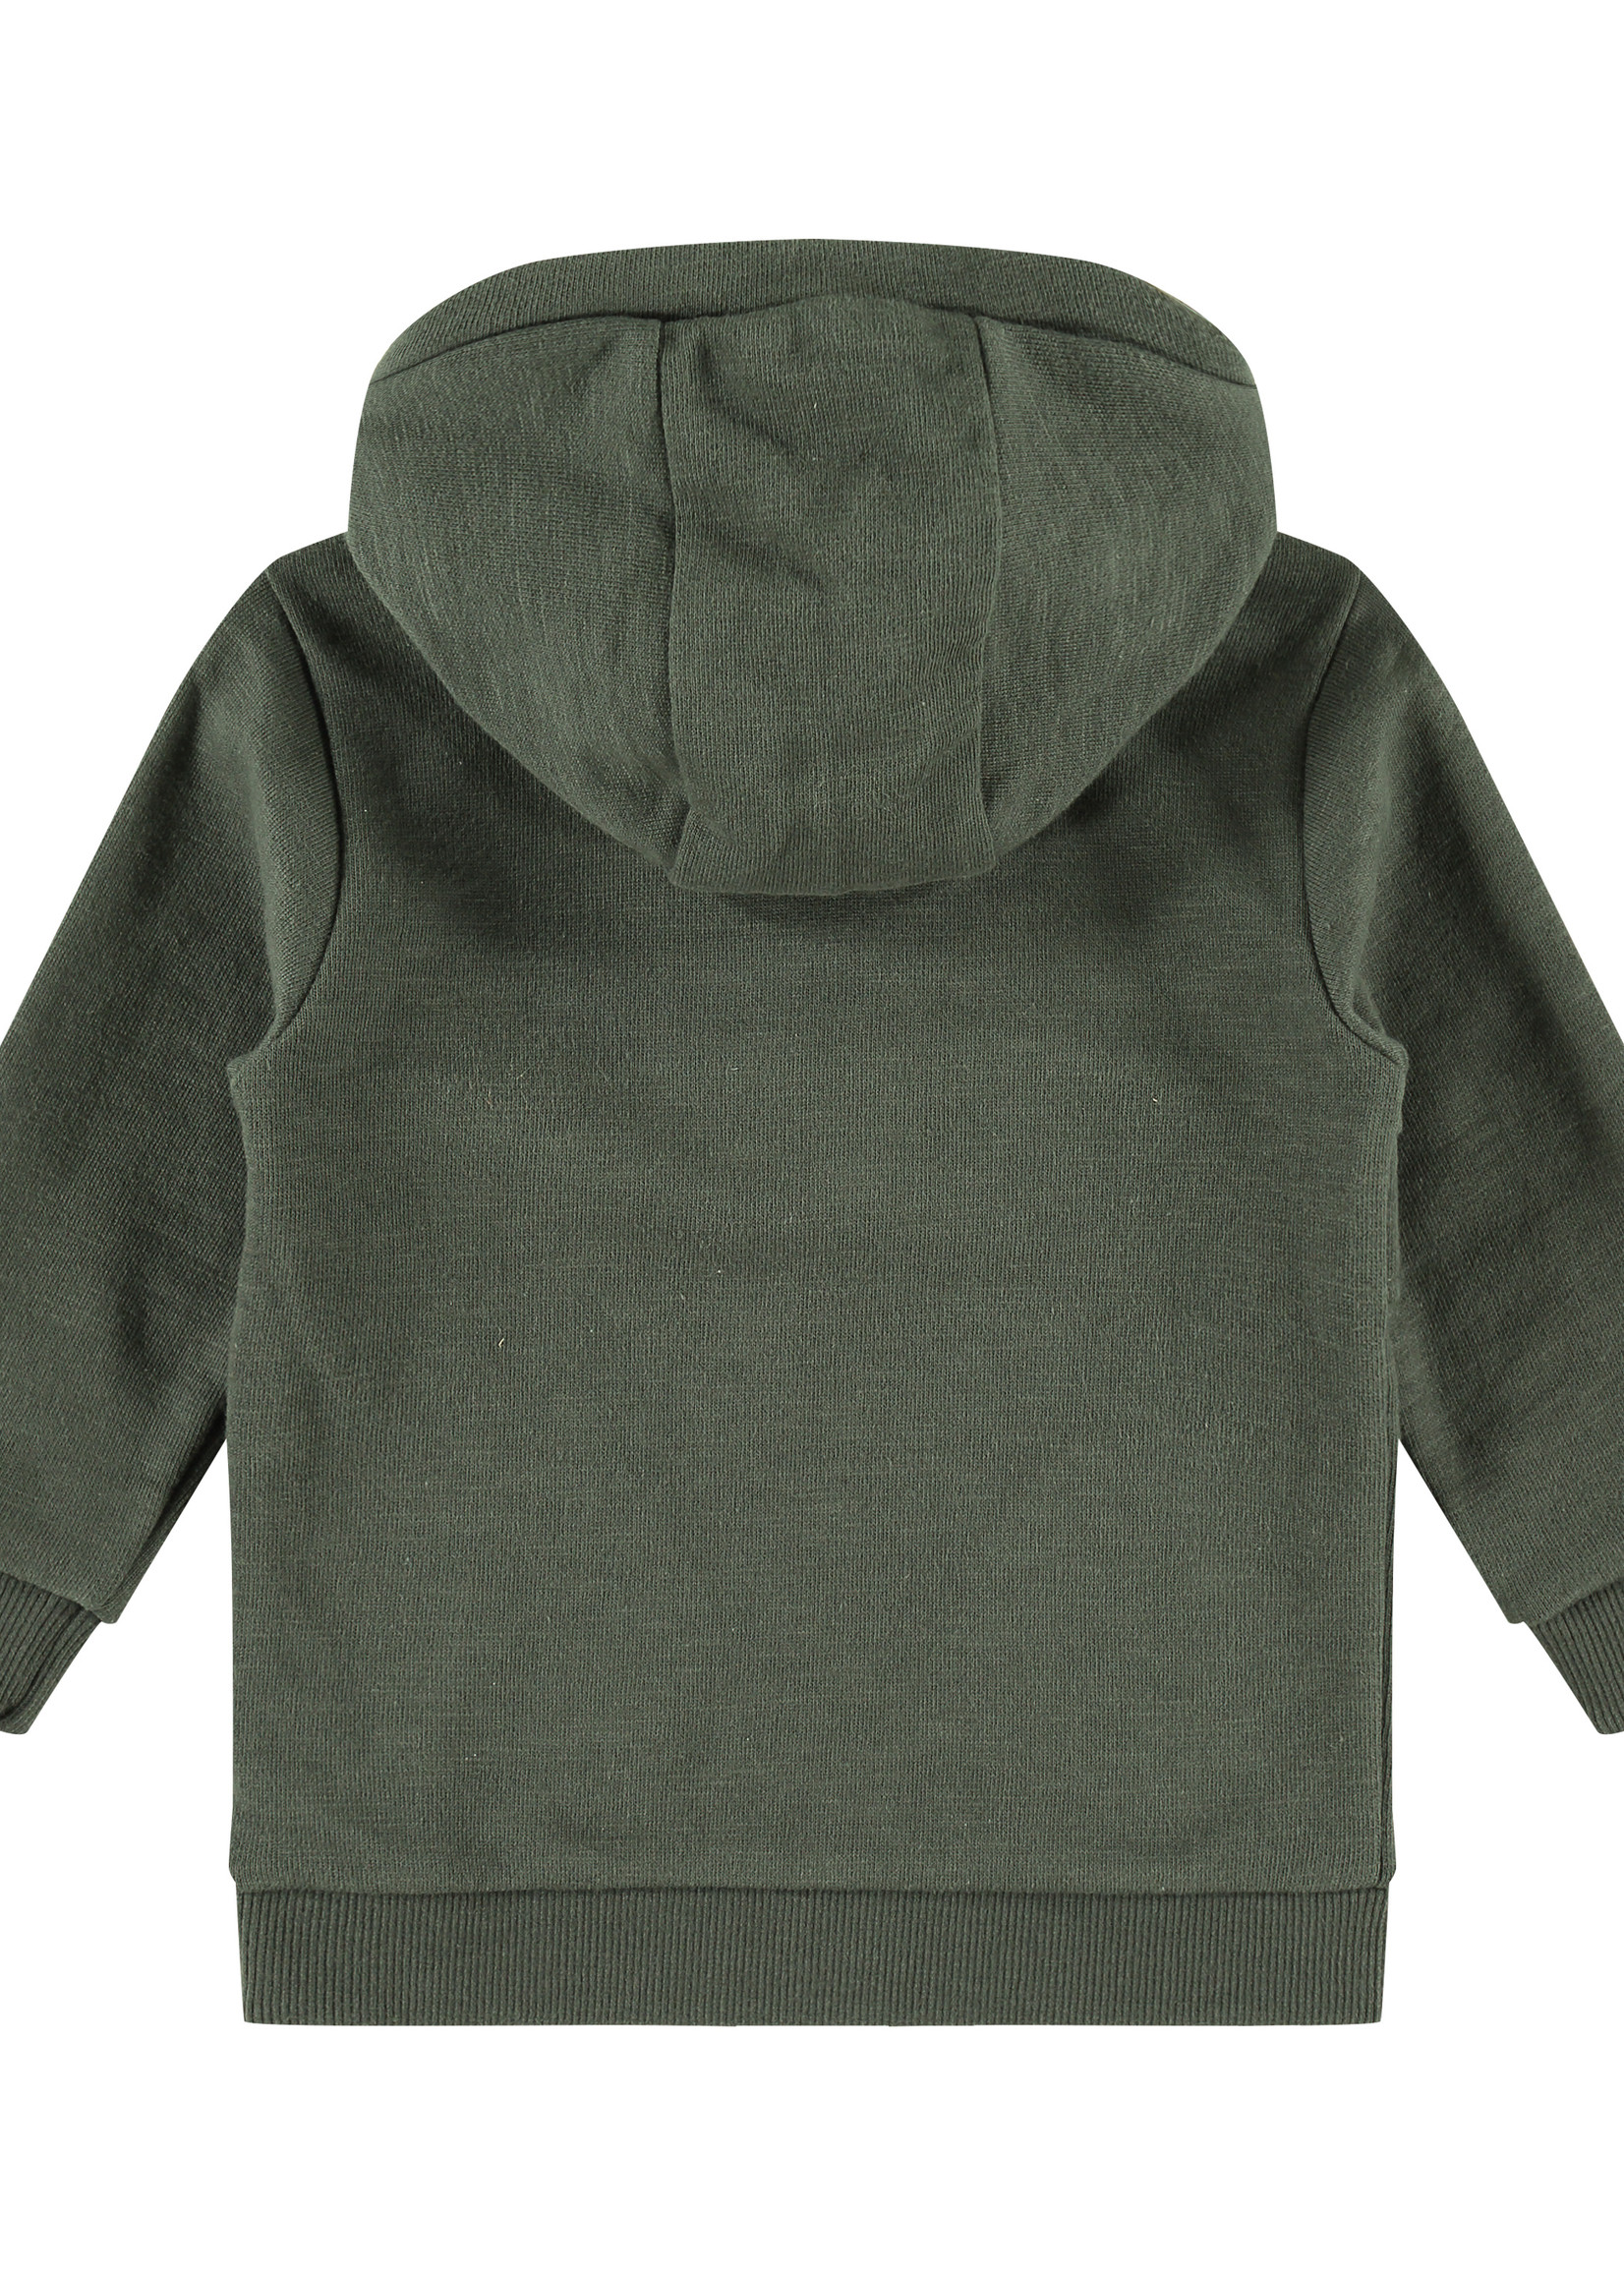 Babyface boys sweatshirt, dark green, BBE21407451